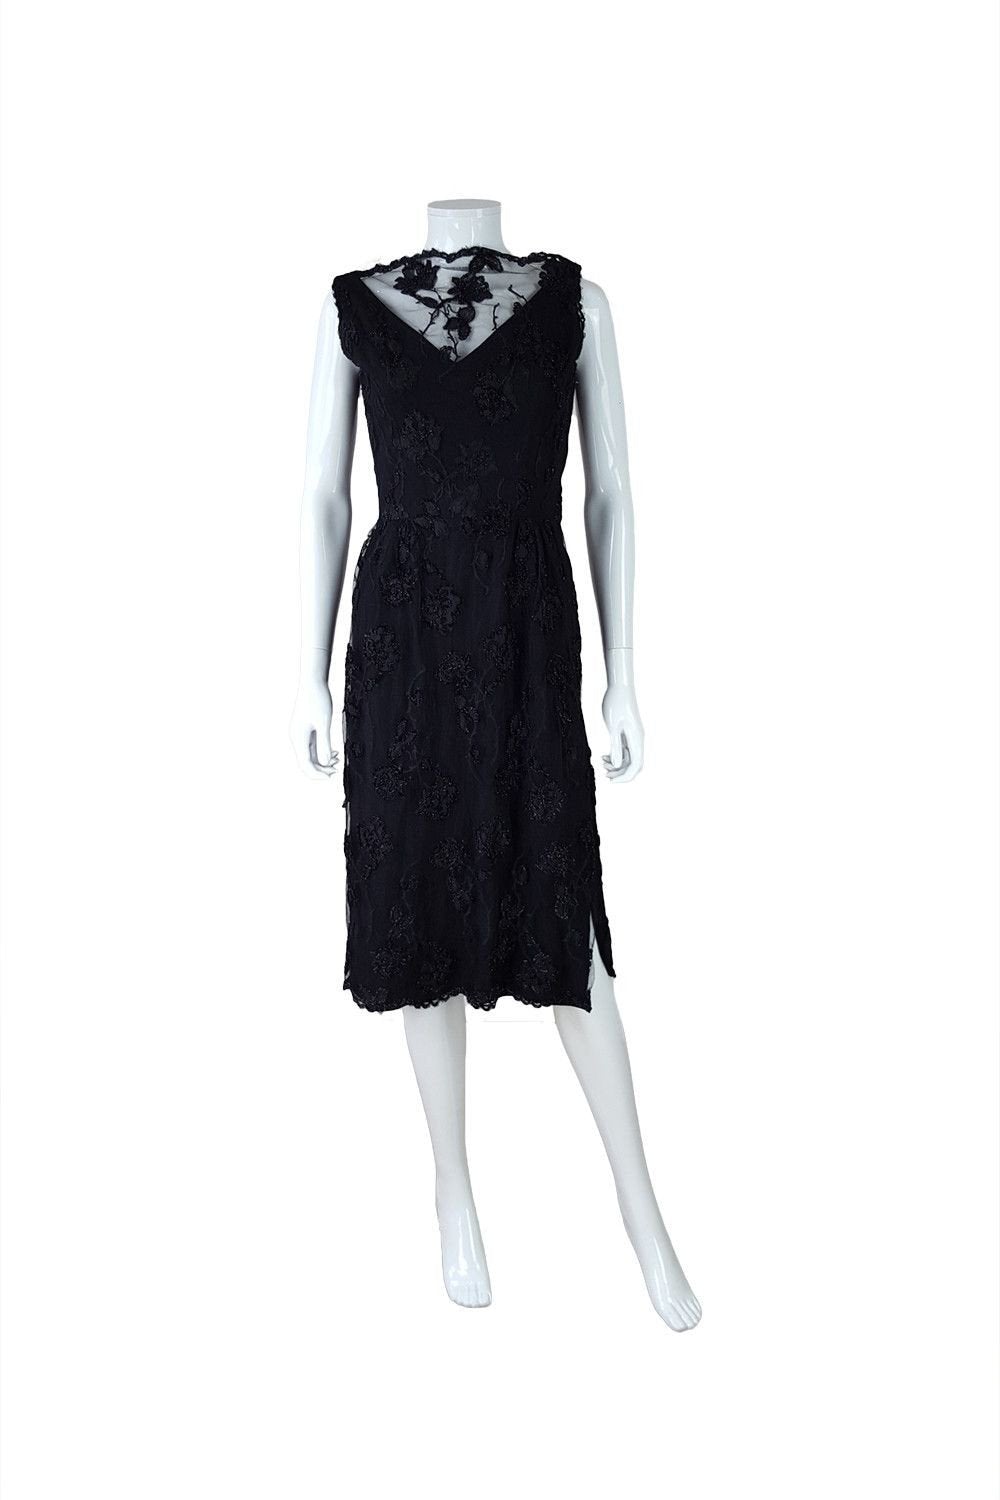 ESTEVEZ Vintage Black Lace Sleeveless Evening Dress (S) – The Freperie